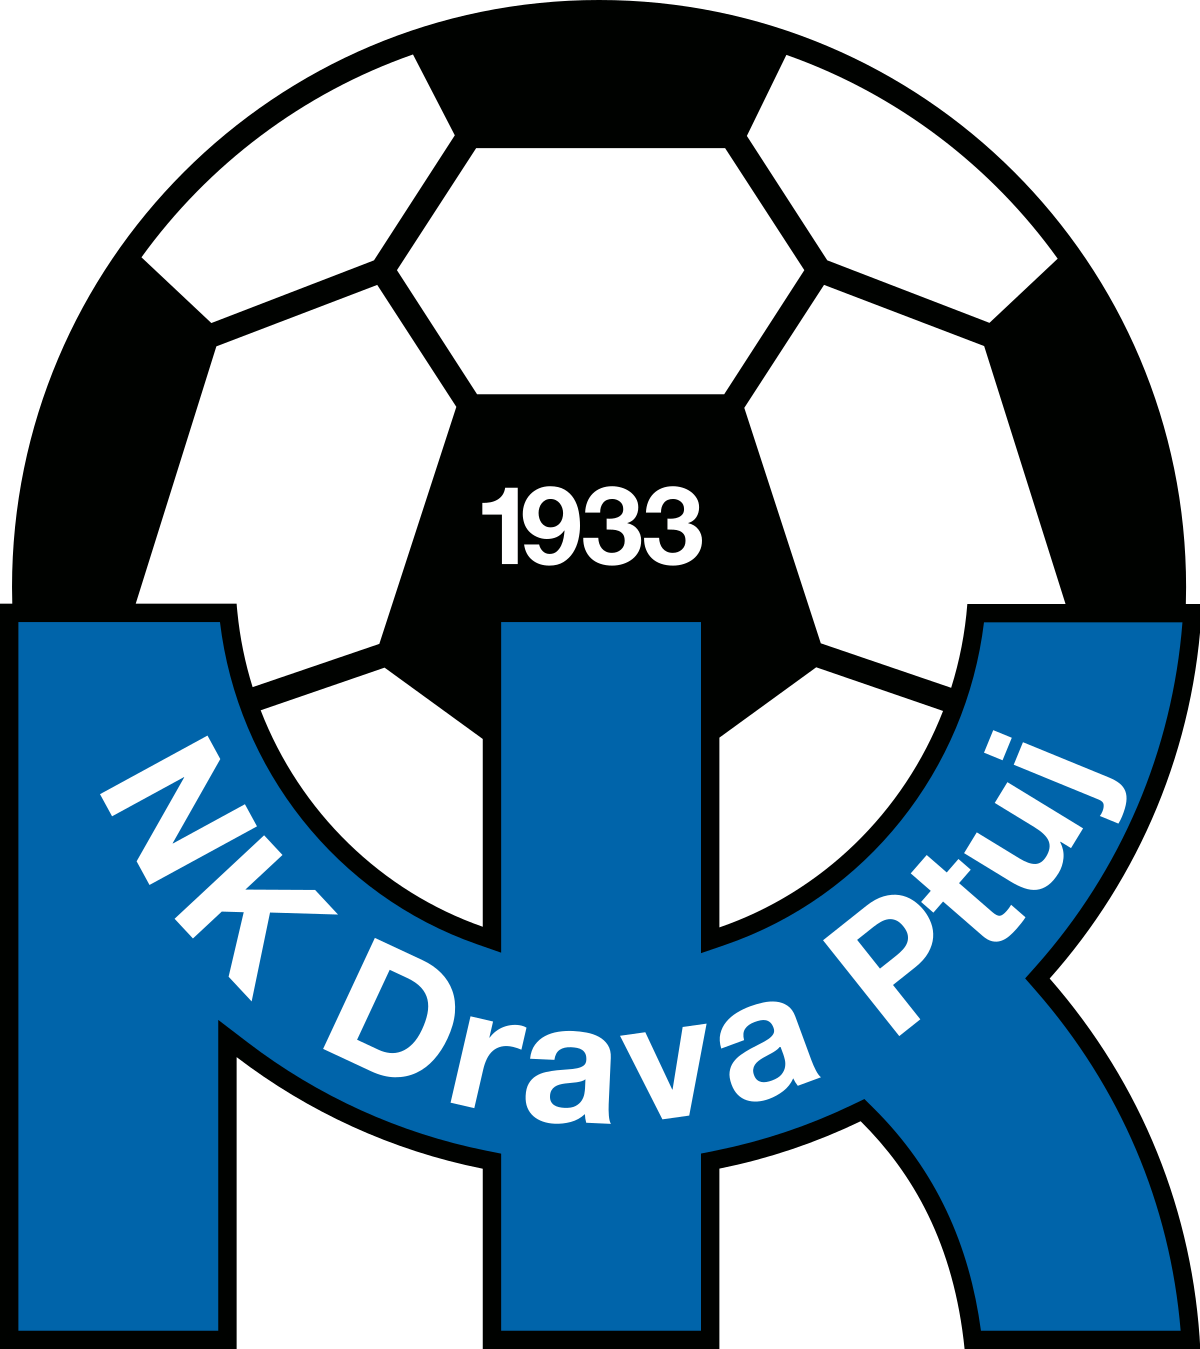 Drava logo